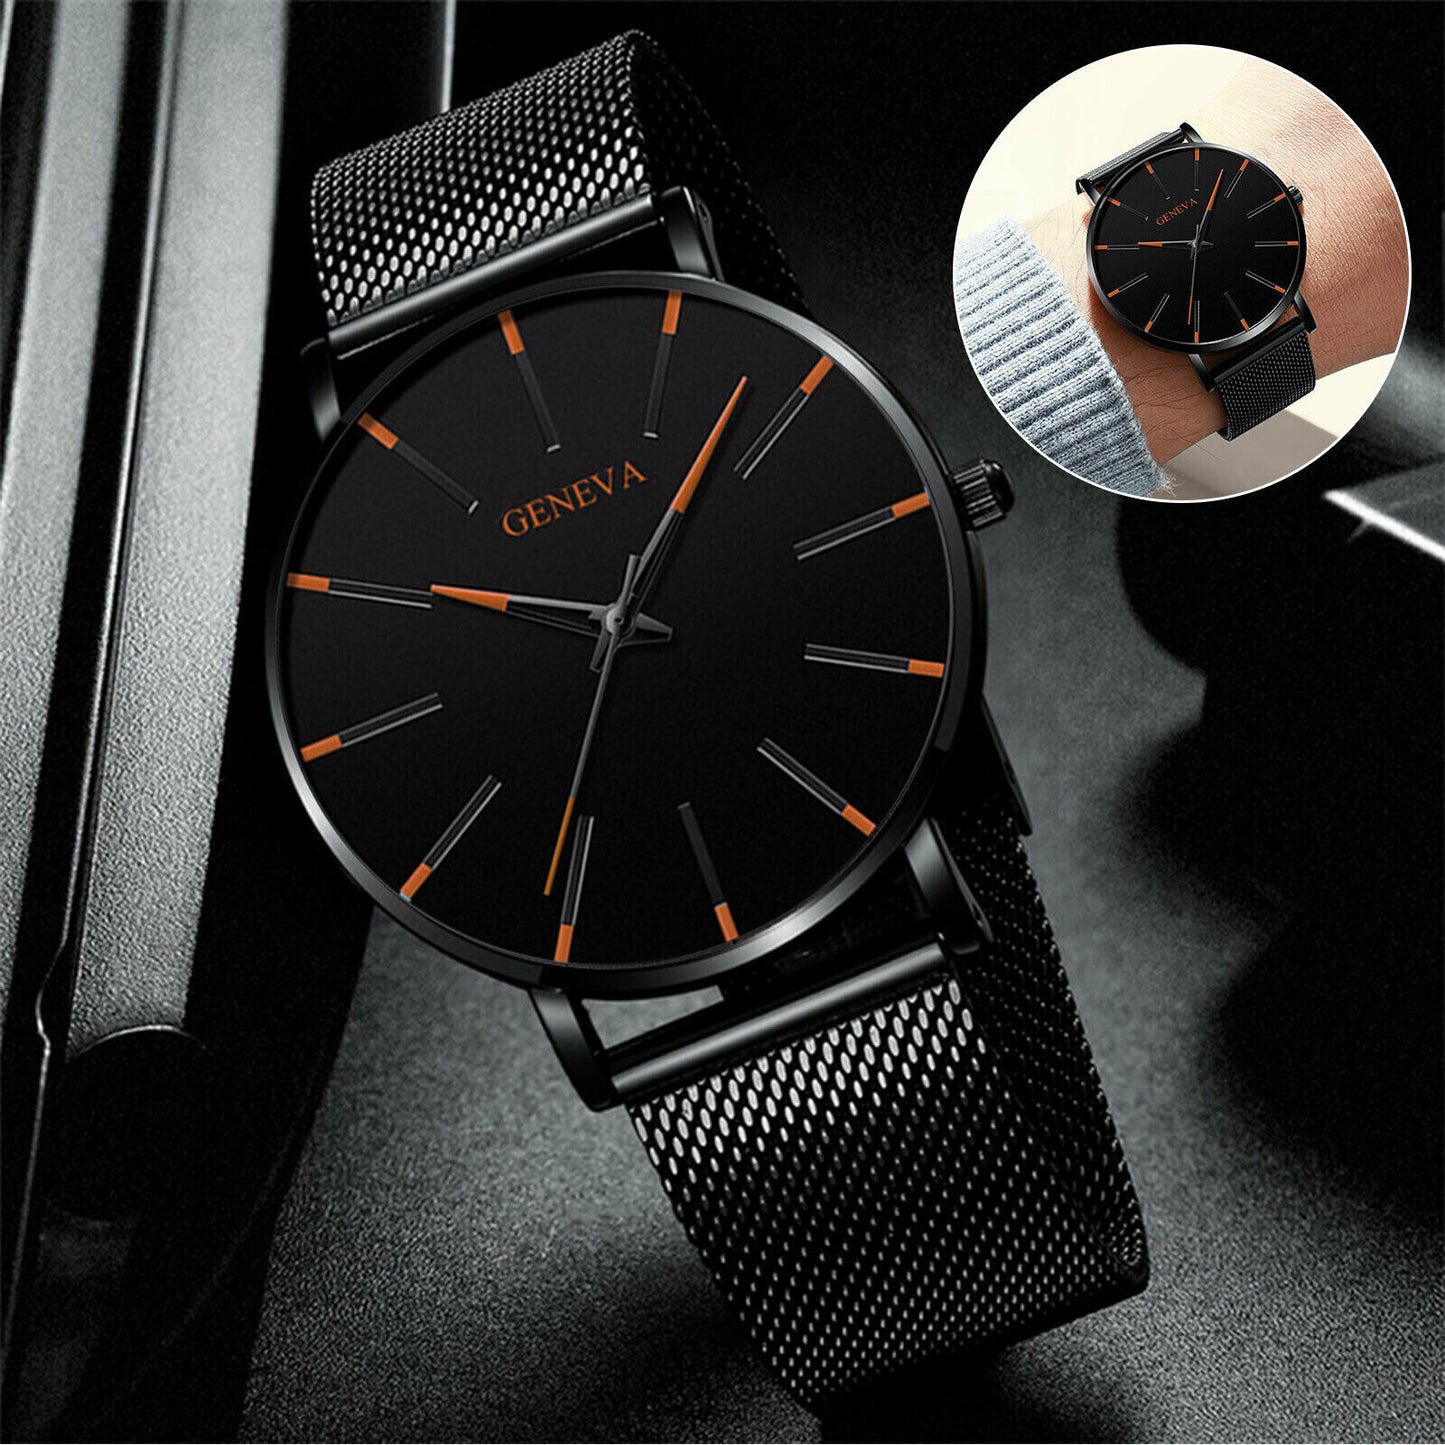 TimelessLux Watches Quartz Watch Stainless Steel Analog Ultra Thin Geneva